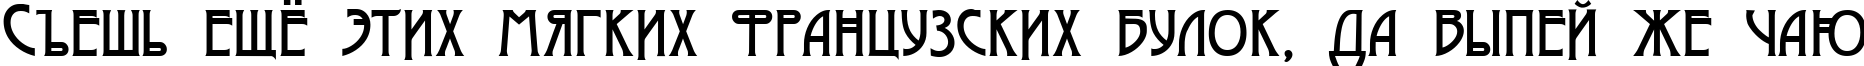 Пример написания шрифтом Moderno One текста на русском